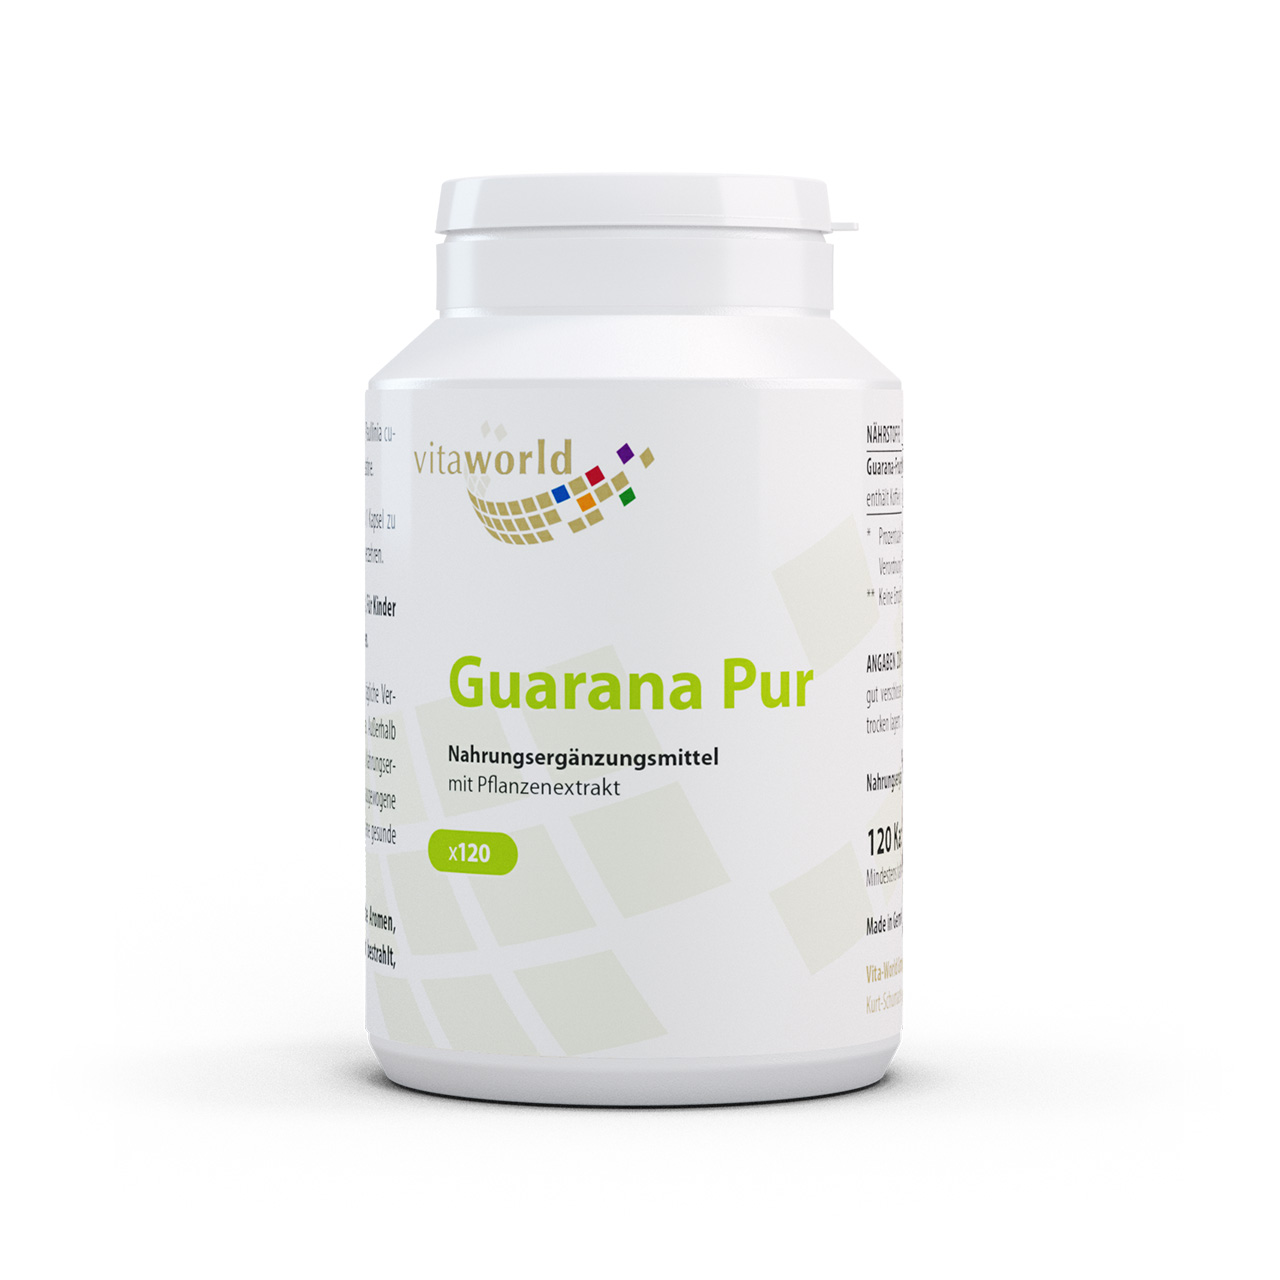 Vitaworld Guarana Pur | 120 Kapseln | 180 mg natürliches Koffein pro Tagesverzehrmenge | gluten- und laktosefrei